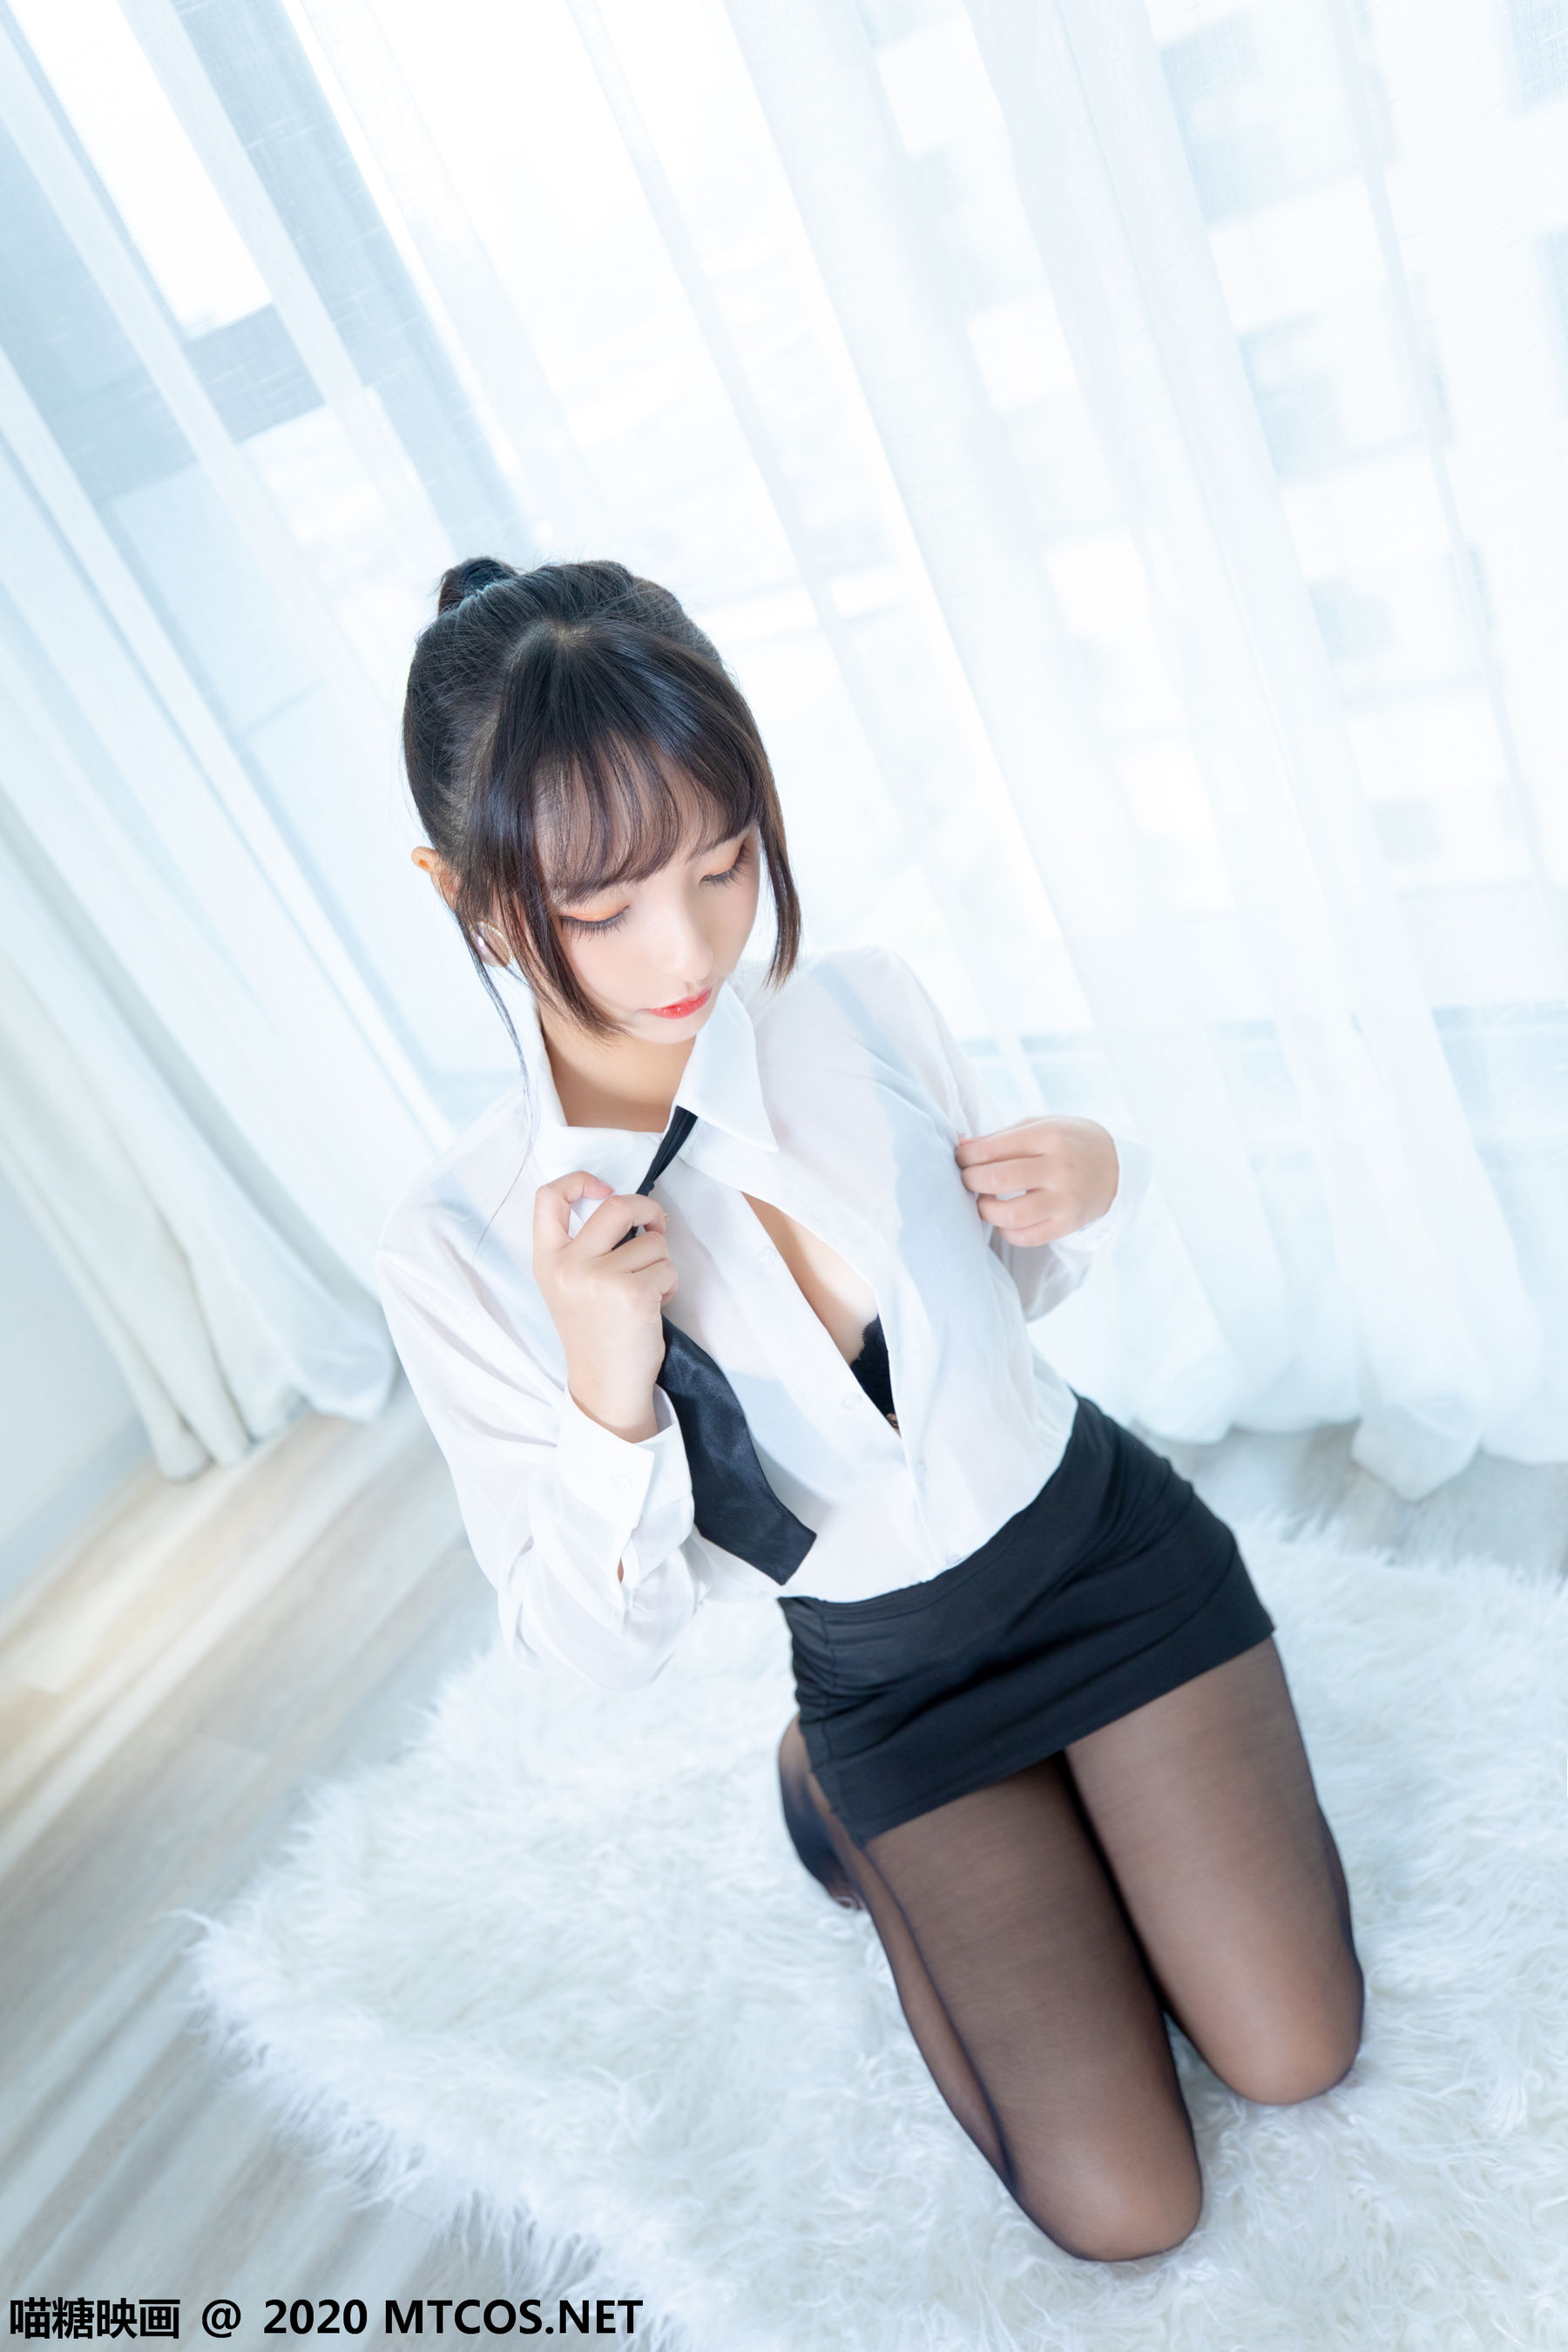 [糖] Vol.202 “OL uniform skirt” photo set